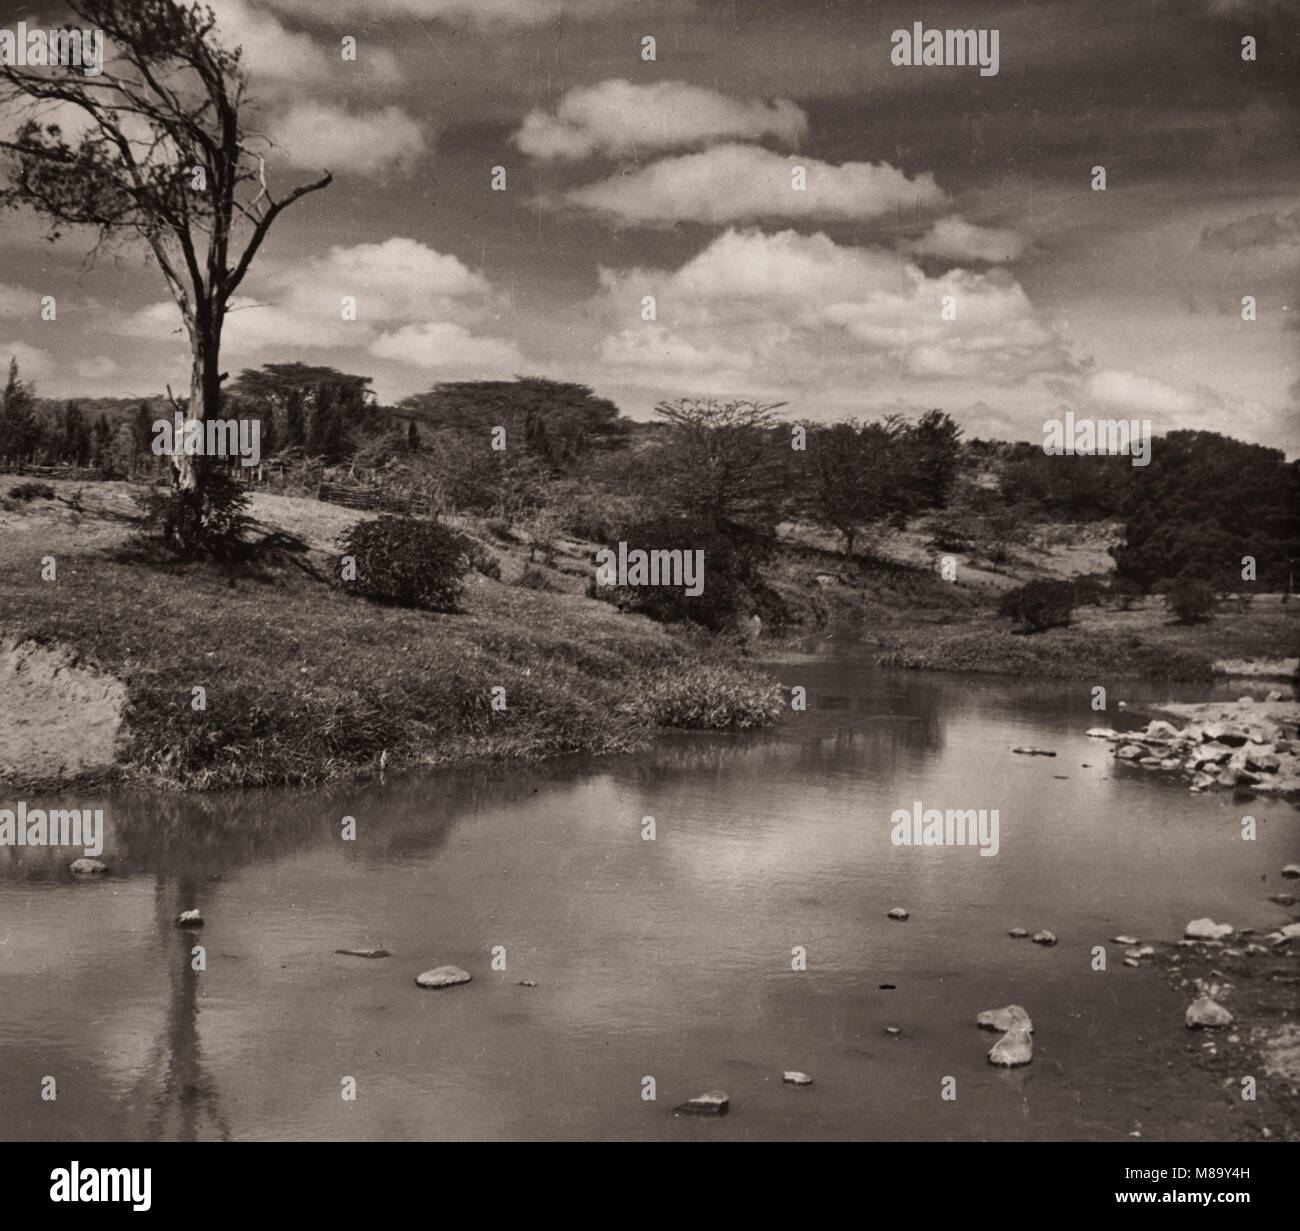 1940s East Africa - rift valley scenery, Kenya Stock Photo - Alamy